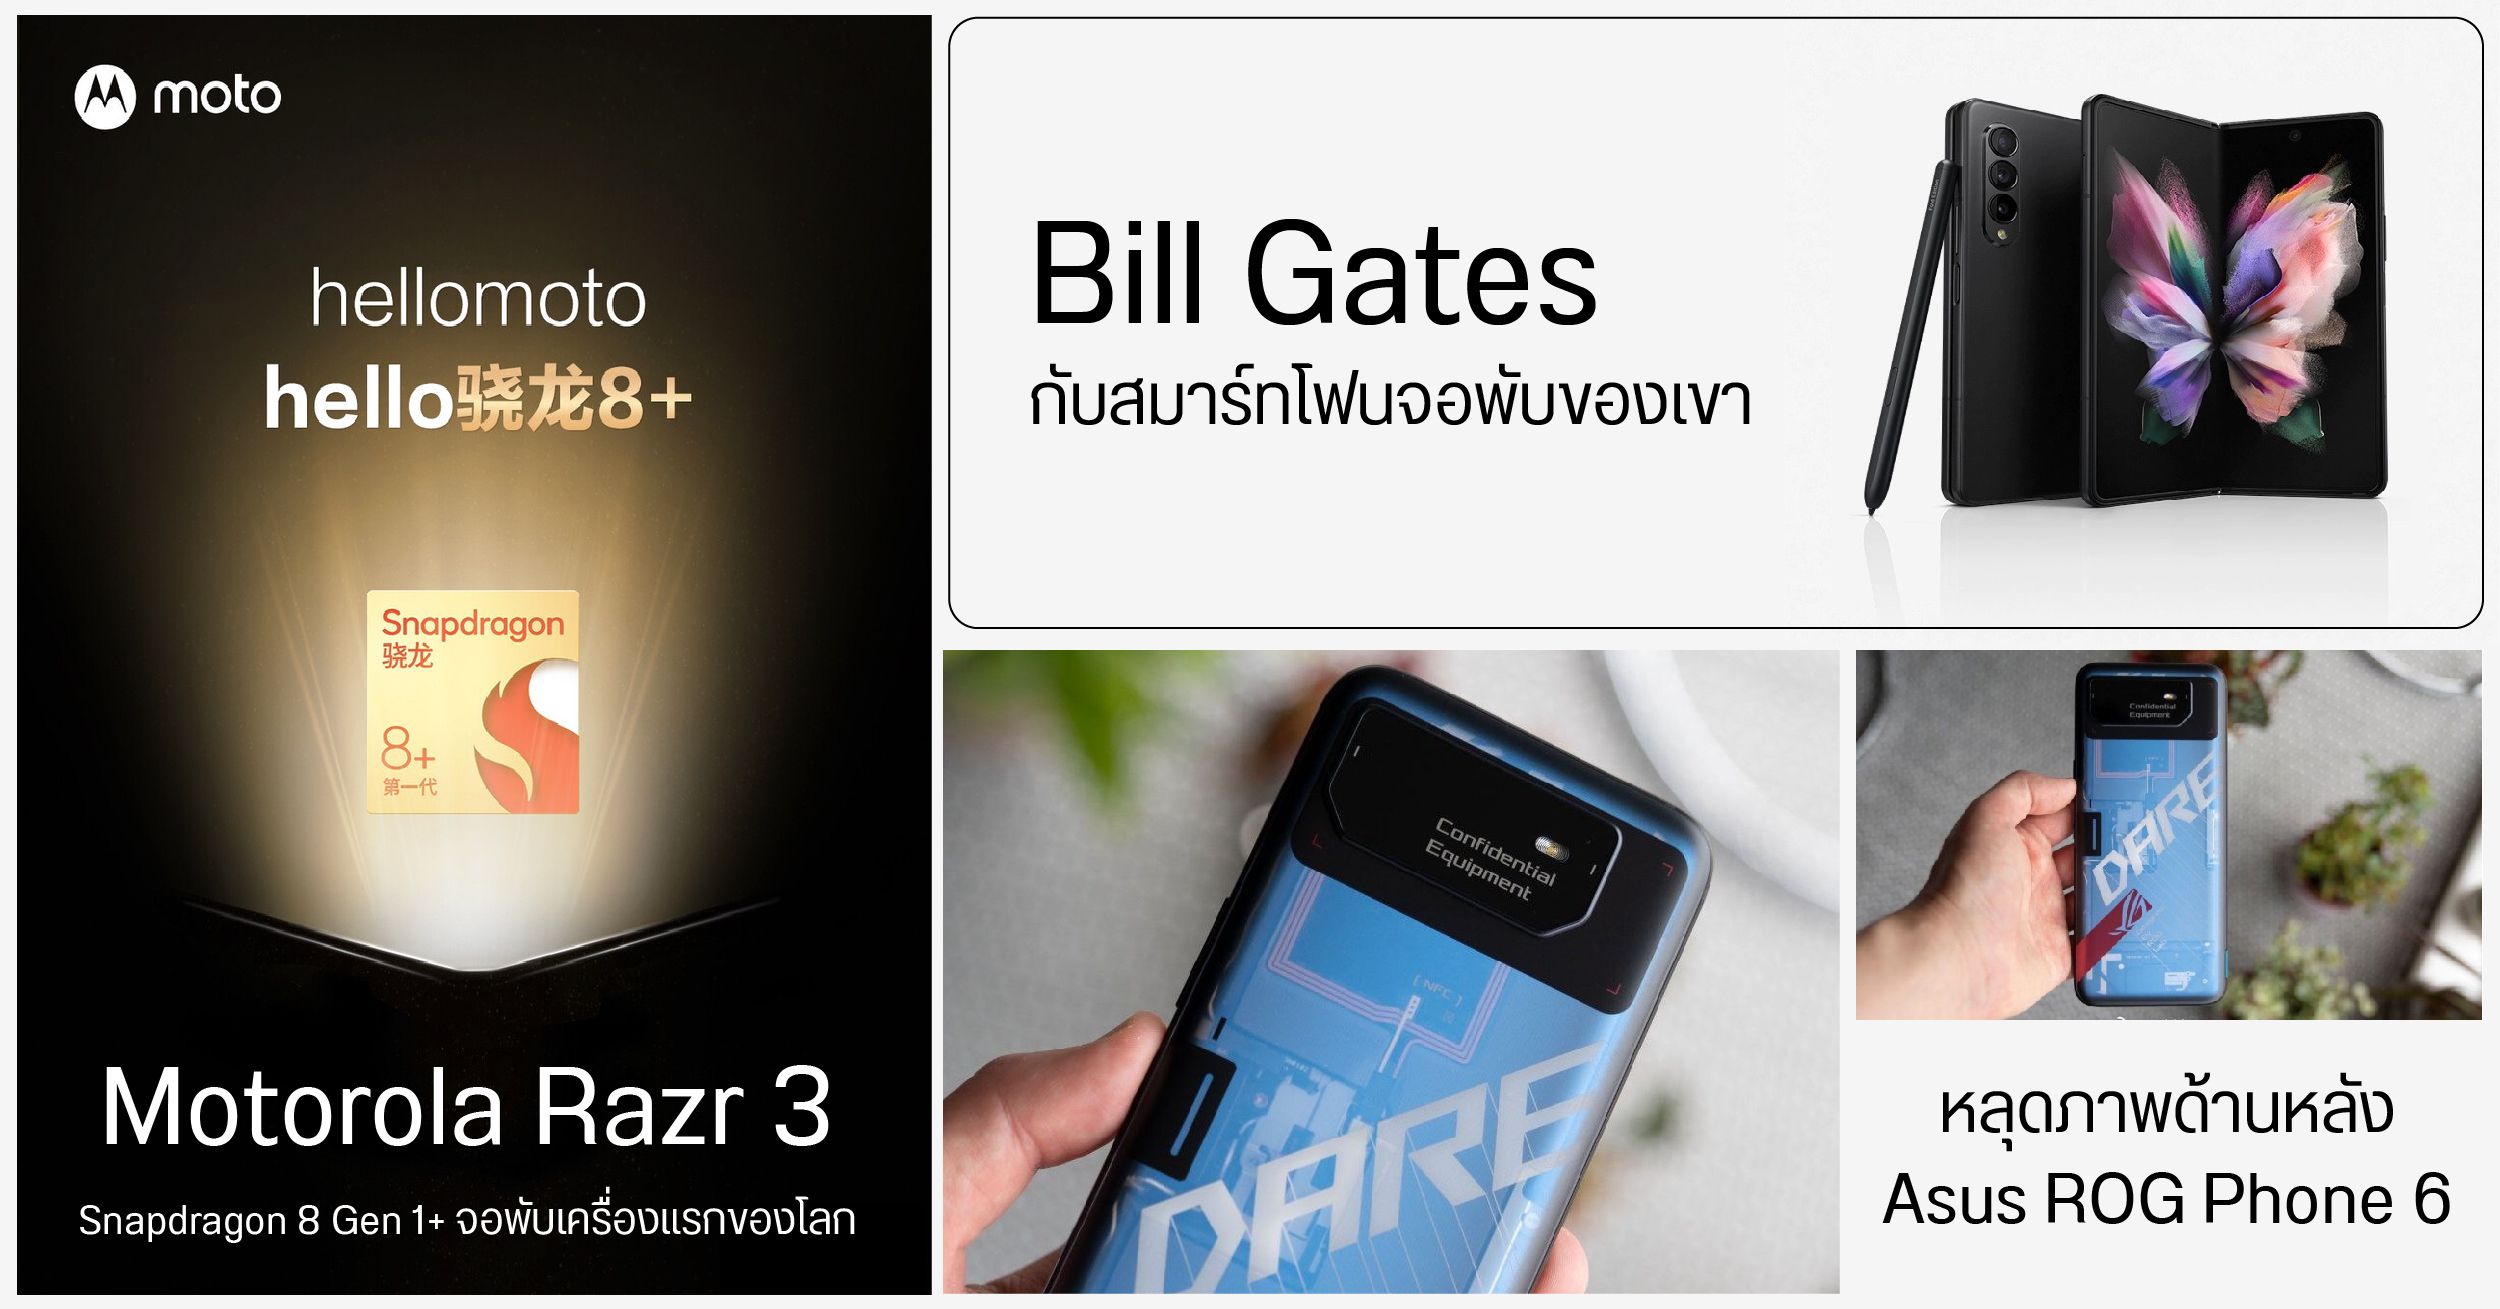 Bill Gates เผยมือถือที่ใช้อยู่ / มือถือจอพับ moto razr 3 จะมากับ Snapdragon 8+ Gen 1 / หลุดภาพ Asus ROG Phone 6